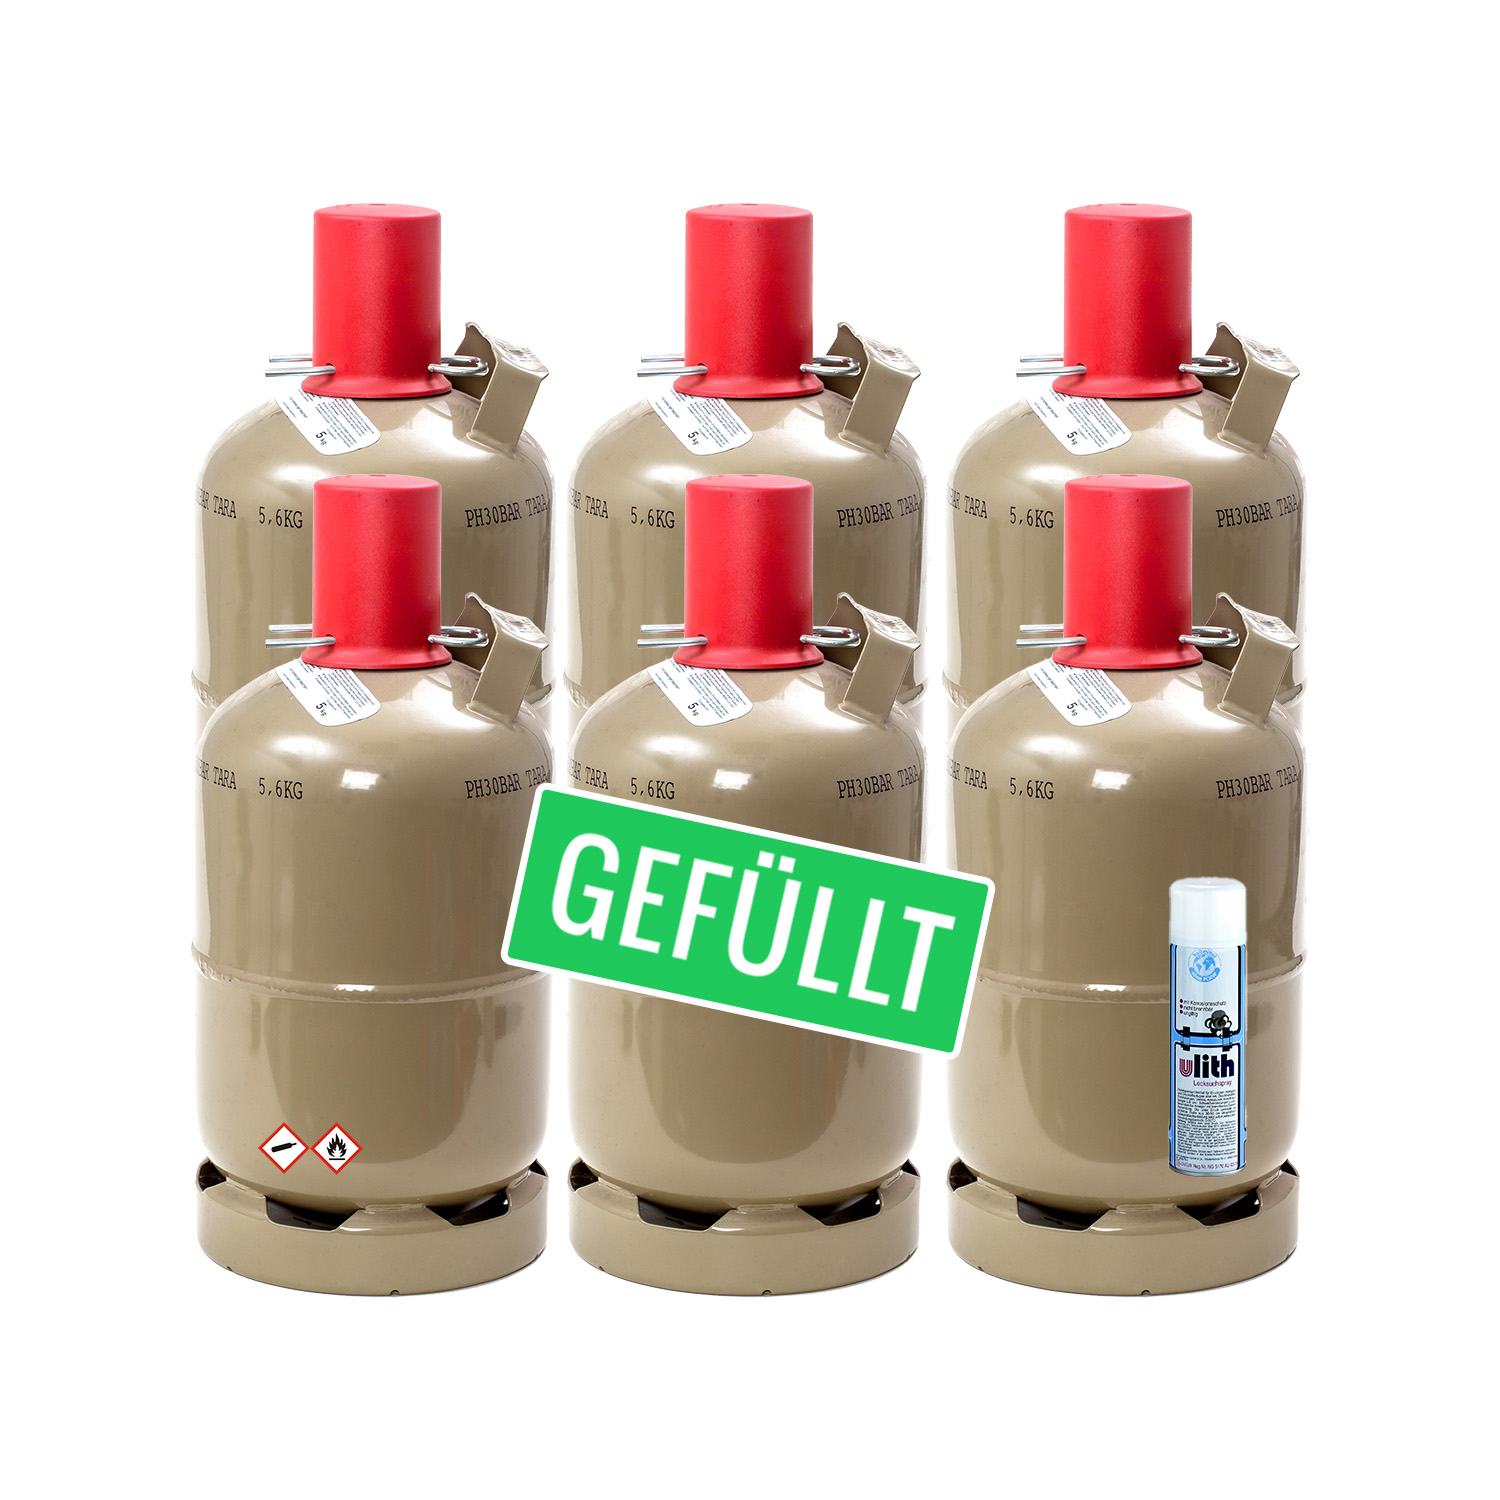 6x Propan-Gas-Flasche 5 kg gefüllt, inkl. Lecksuch  spray für Camping, Gasgrill, Gaskocher